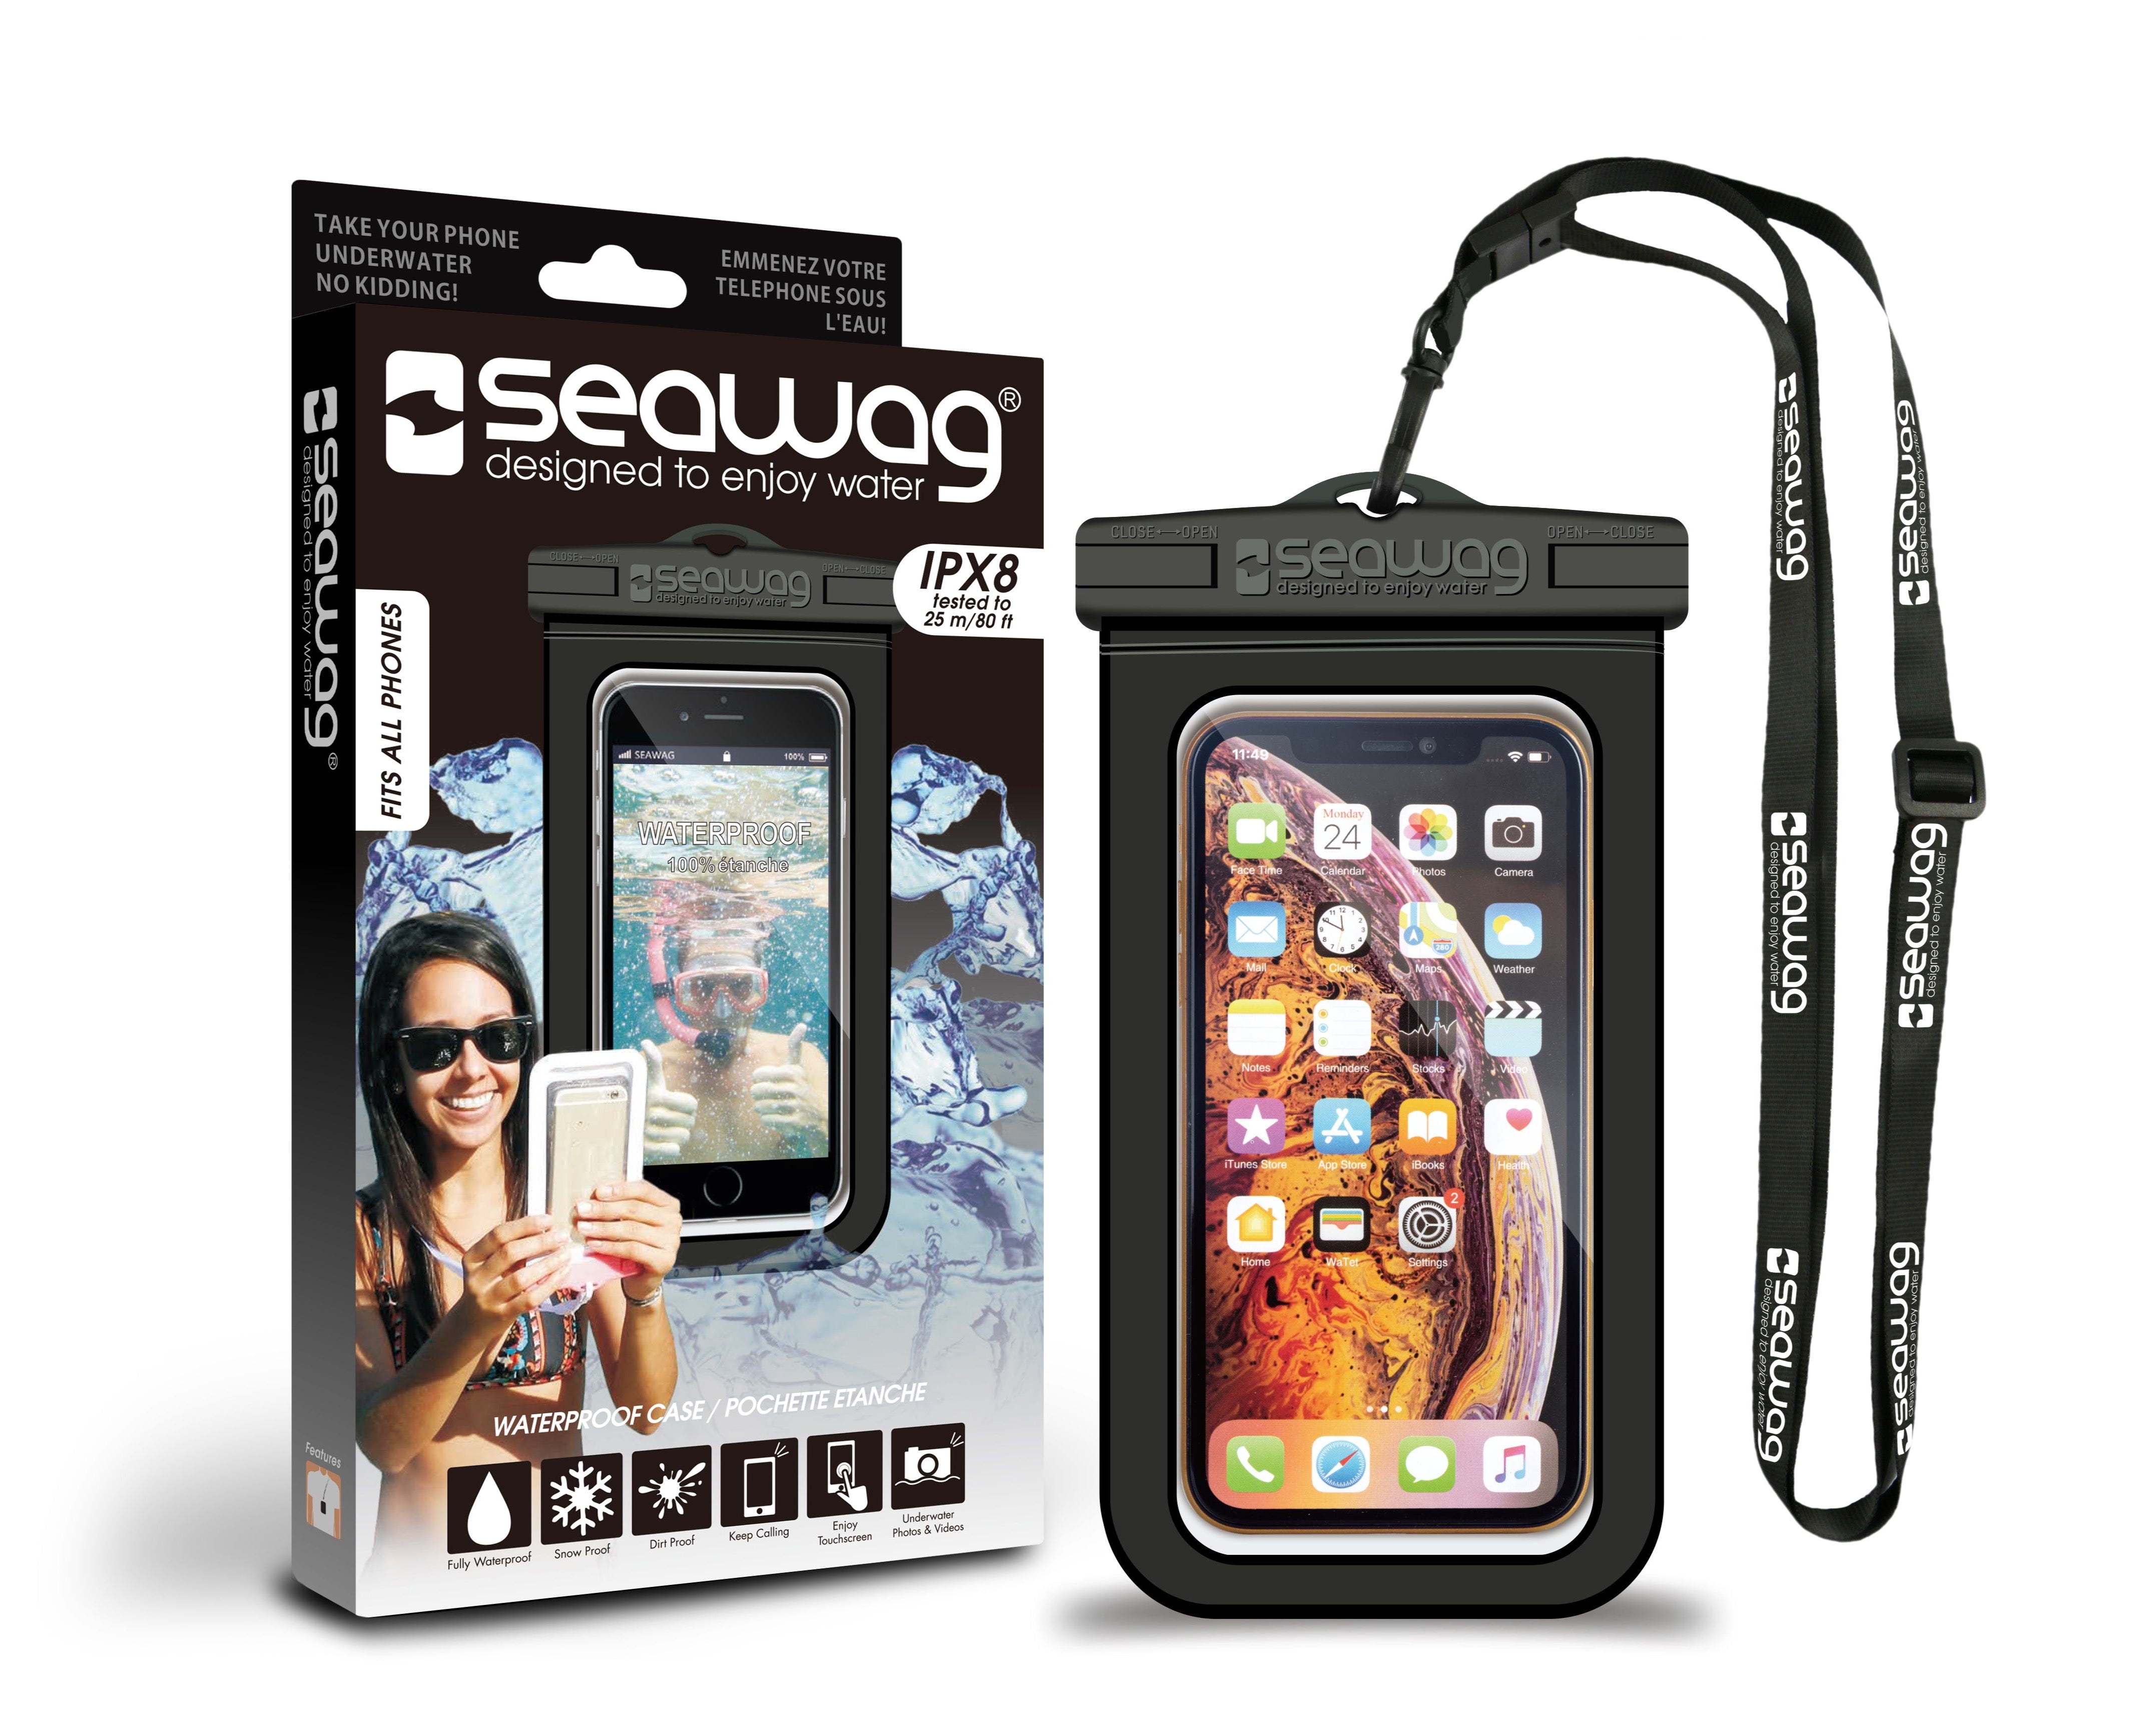 Universal Waterproof Case For Smartphone - Black